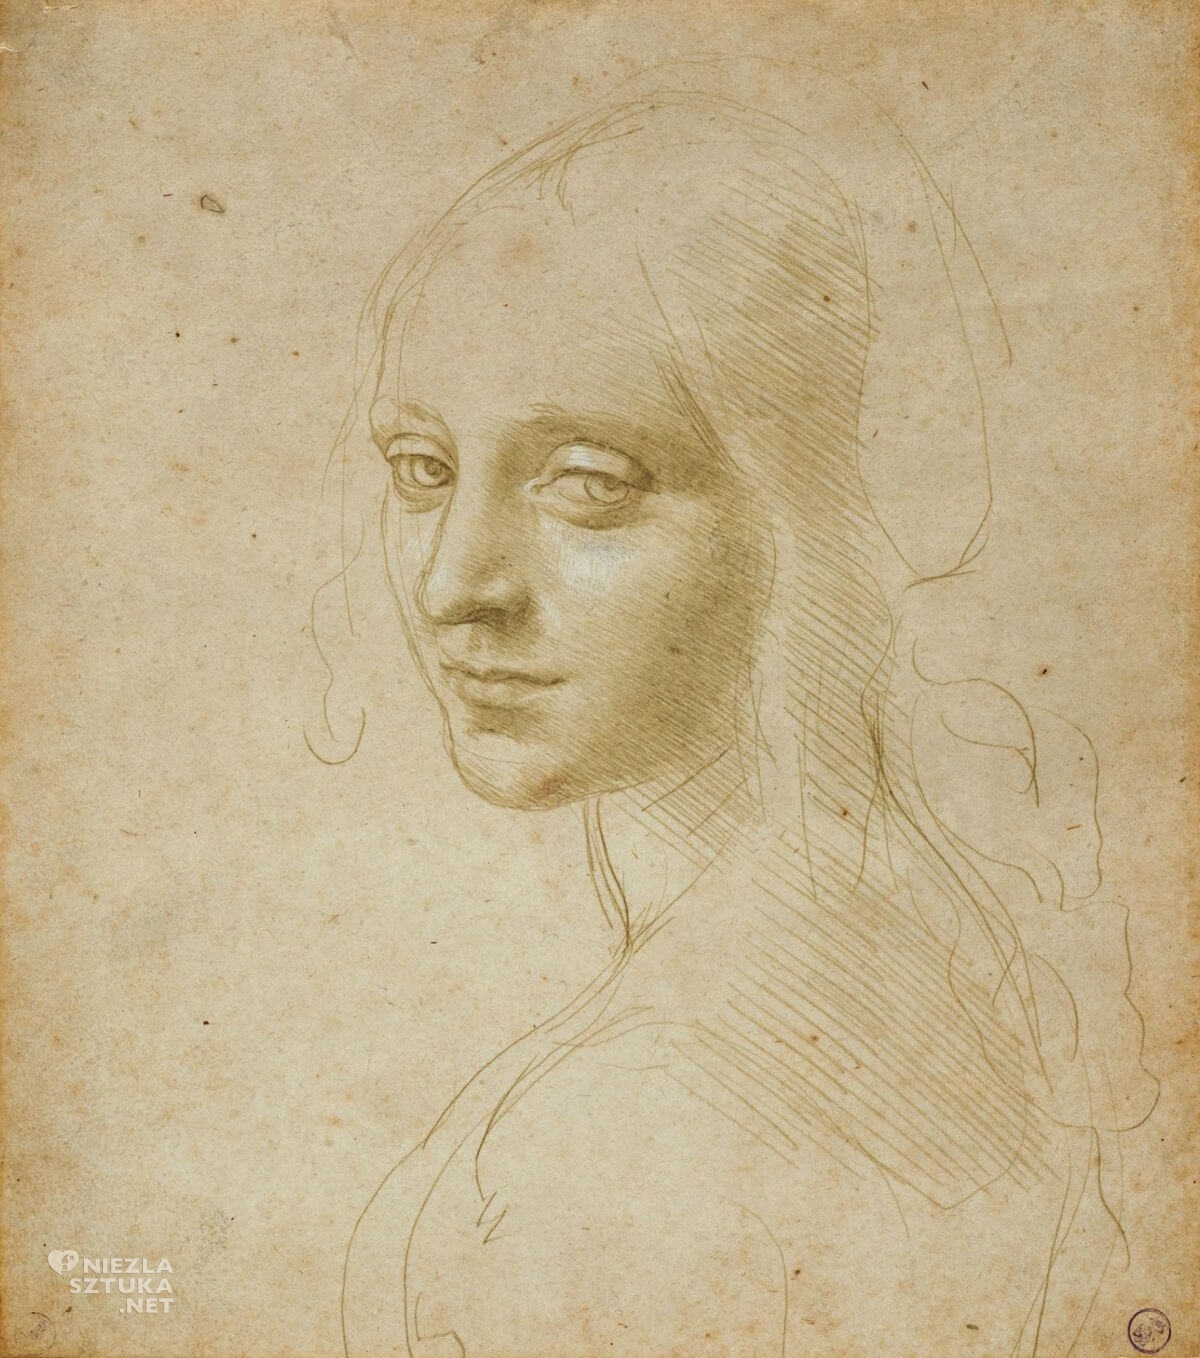 Leonardo da Vinci, studium, anioł, sztuka włoska, Madonna wśród skał, Niezła sztuka